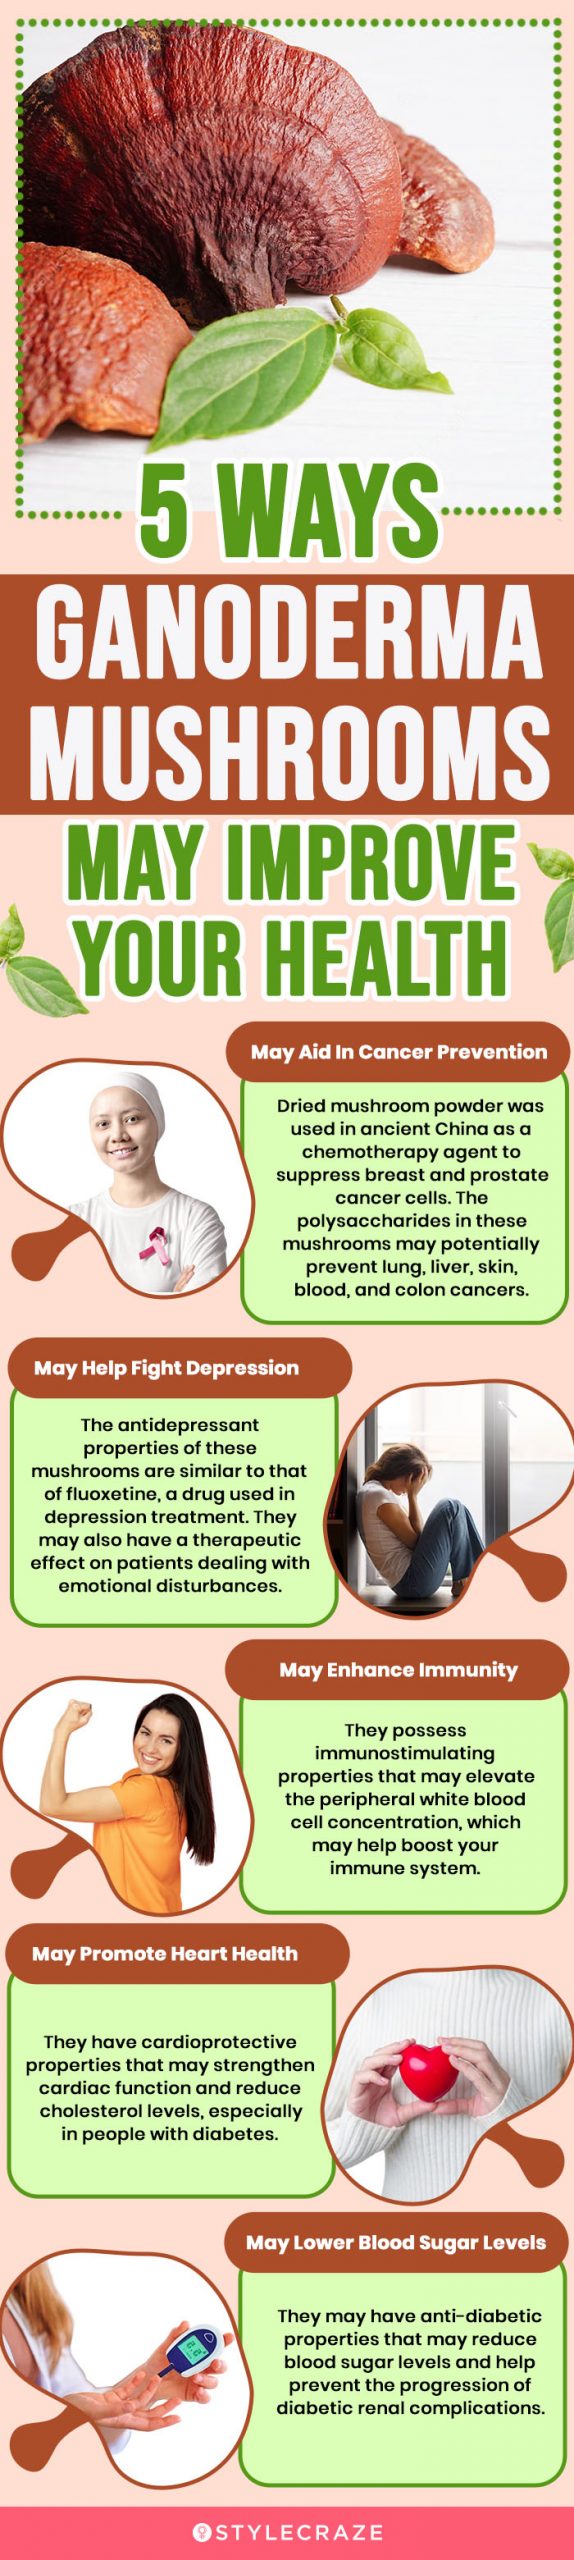 5 ways ganoderma mushrooms may improve your health (infographic)